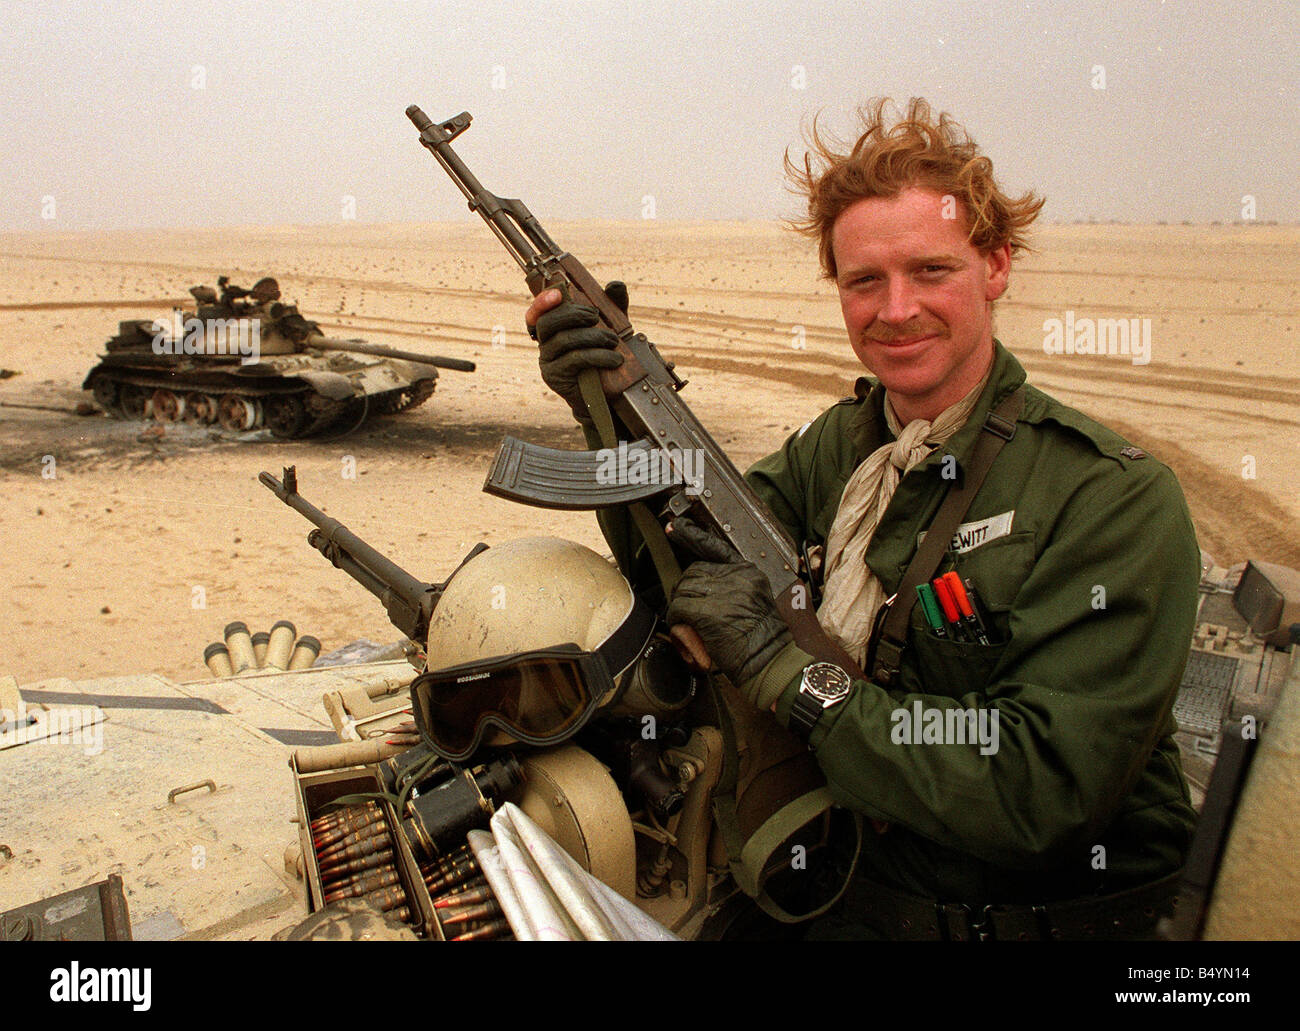 major james hewitt holding a captured iraqi rifle during the gulf war 1991 Stock Photo